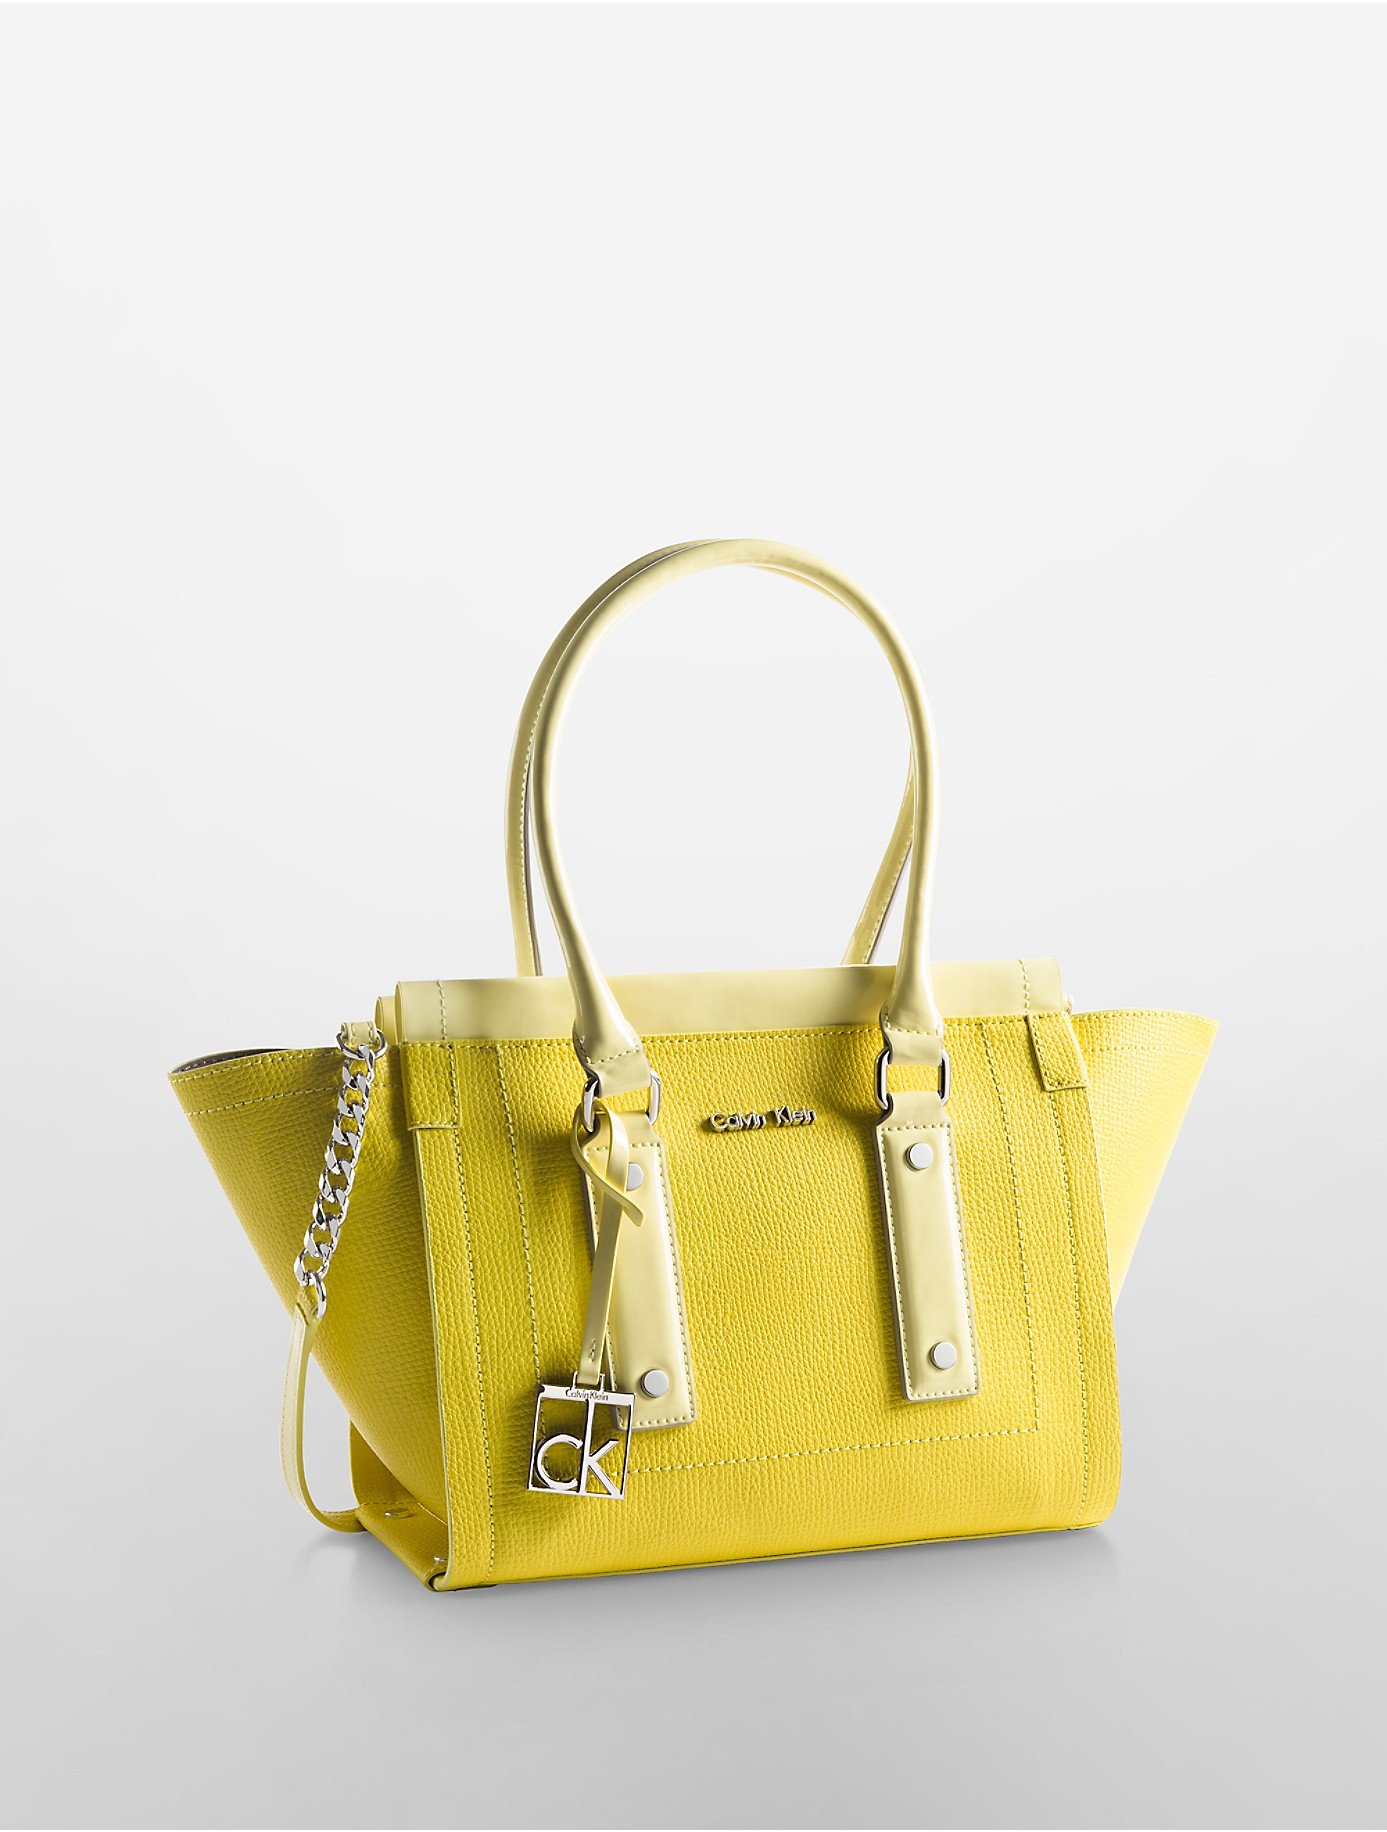 calvin klein yellow handbag Off 71% - RAFFLES-INSTITUTE.EDU.MN